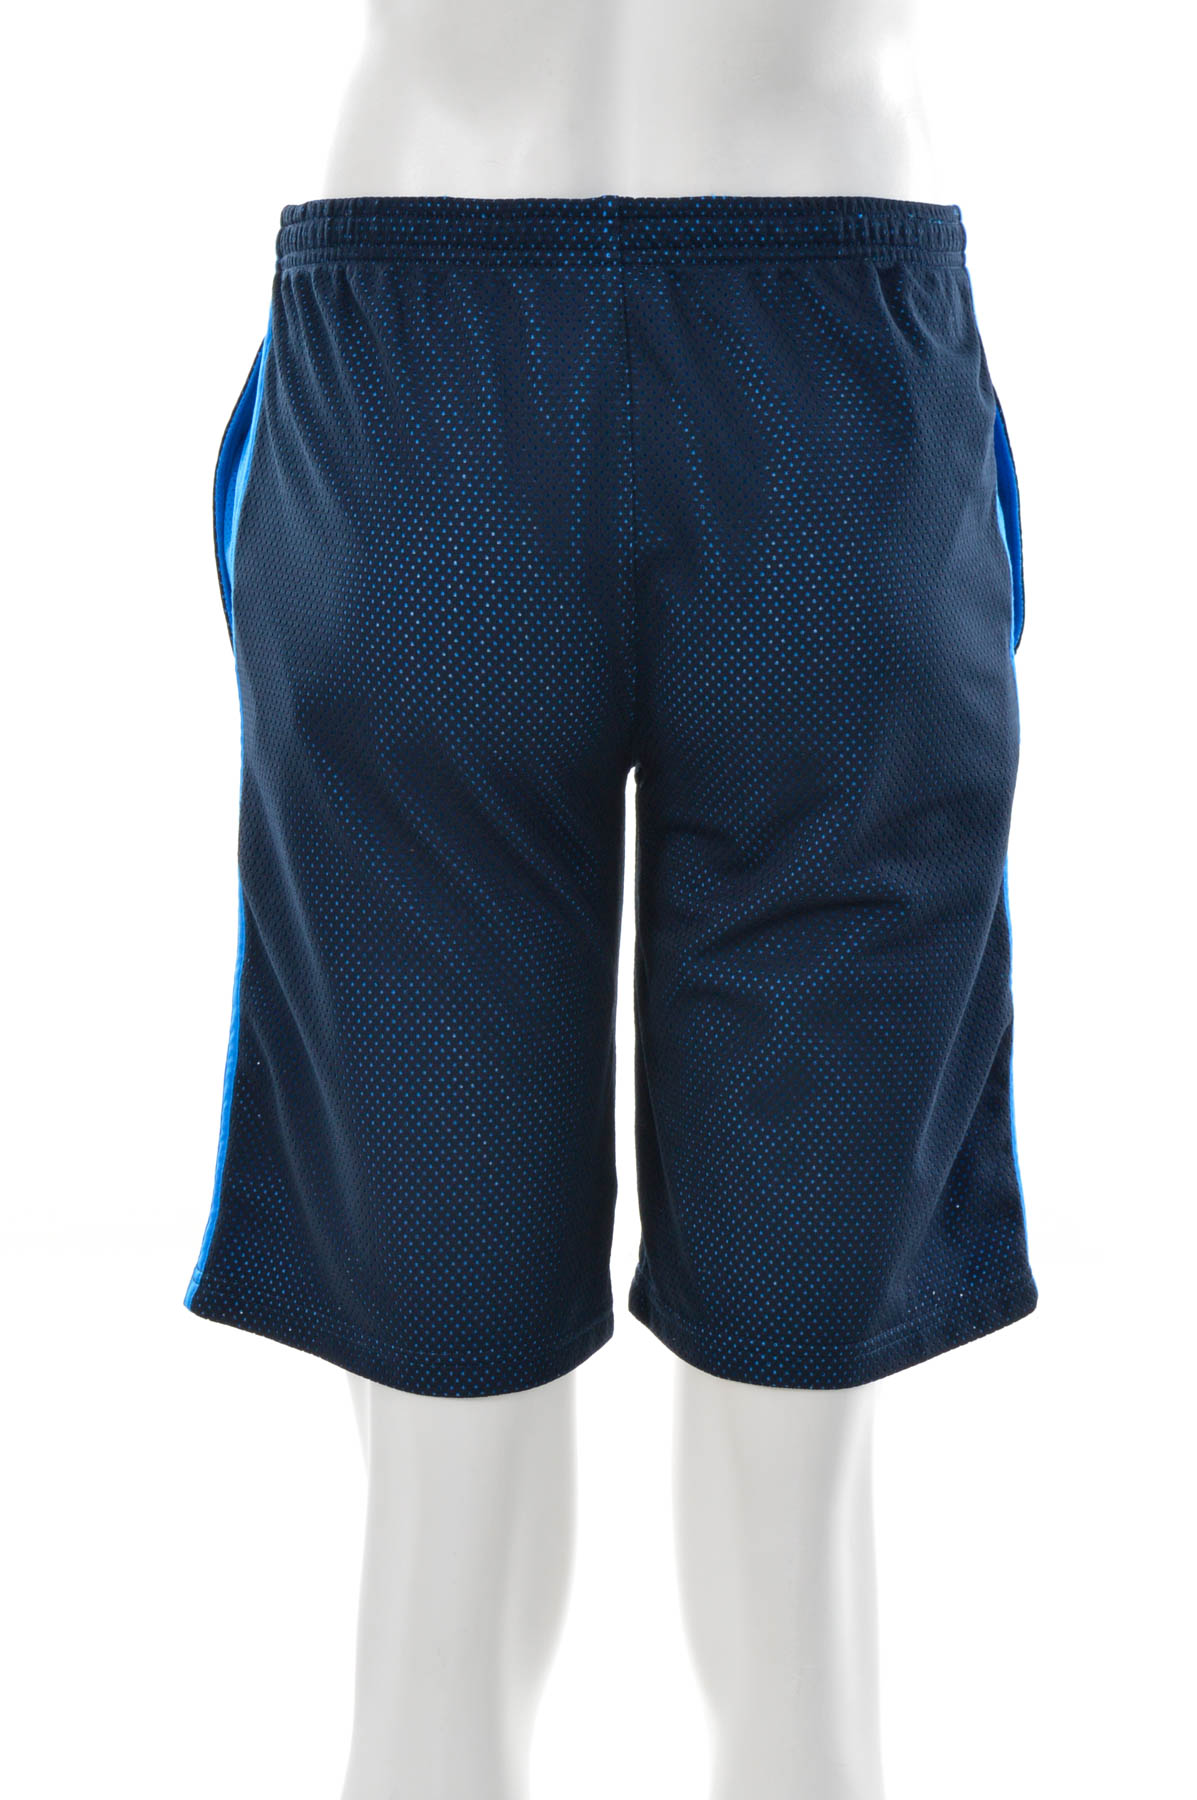 Men's shorts - Manguun Sports - 1